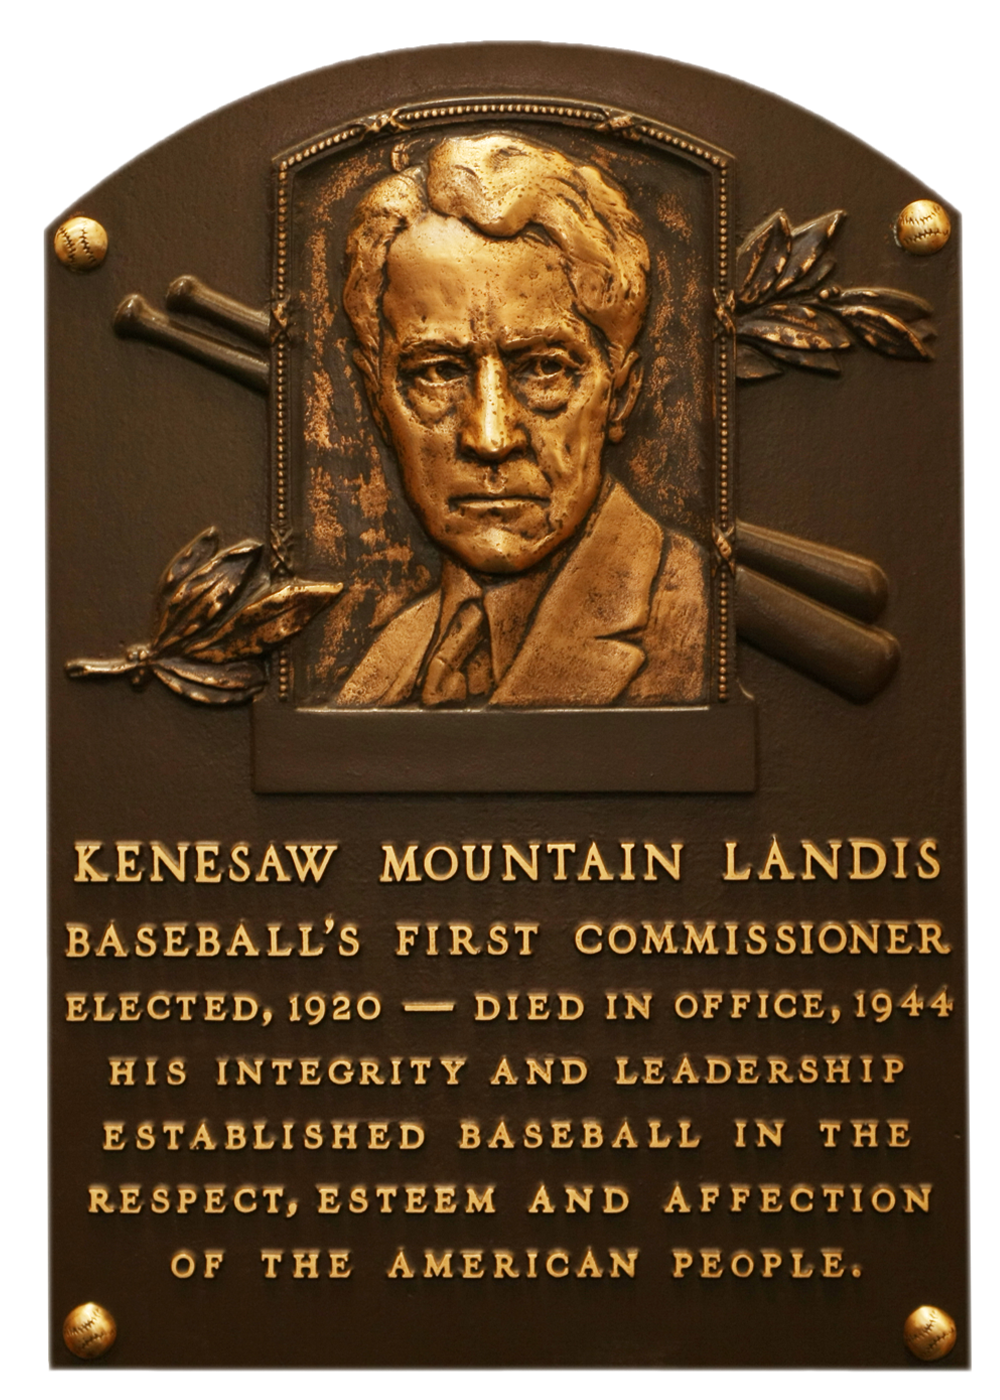 Kenesaw Landis Hall of Fame plaque